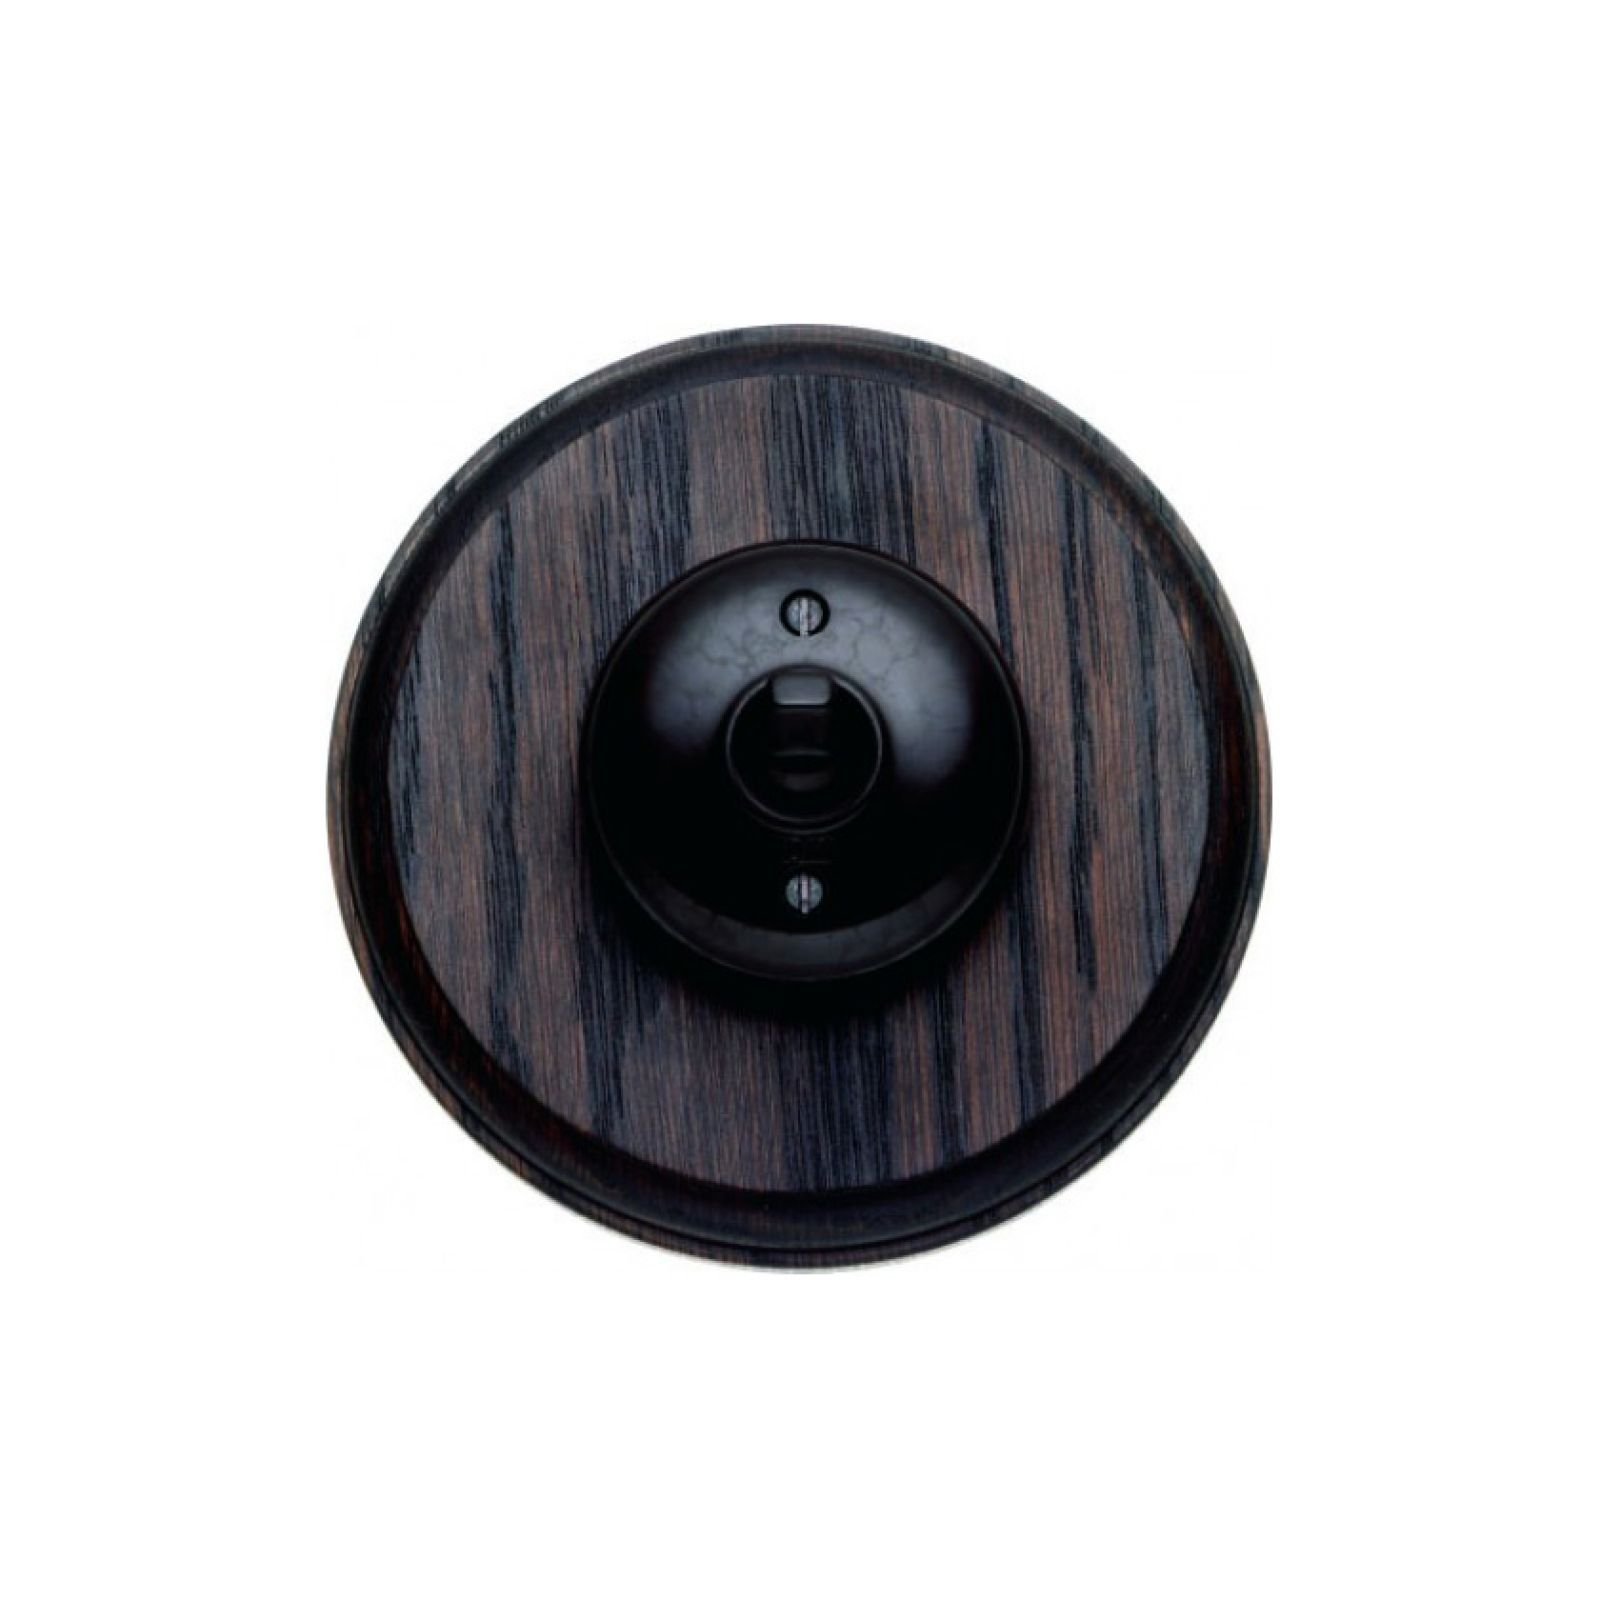 1 gang Bakelite light switch - circular, plain in brown or white